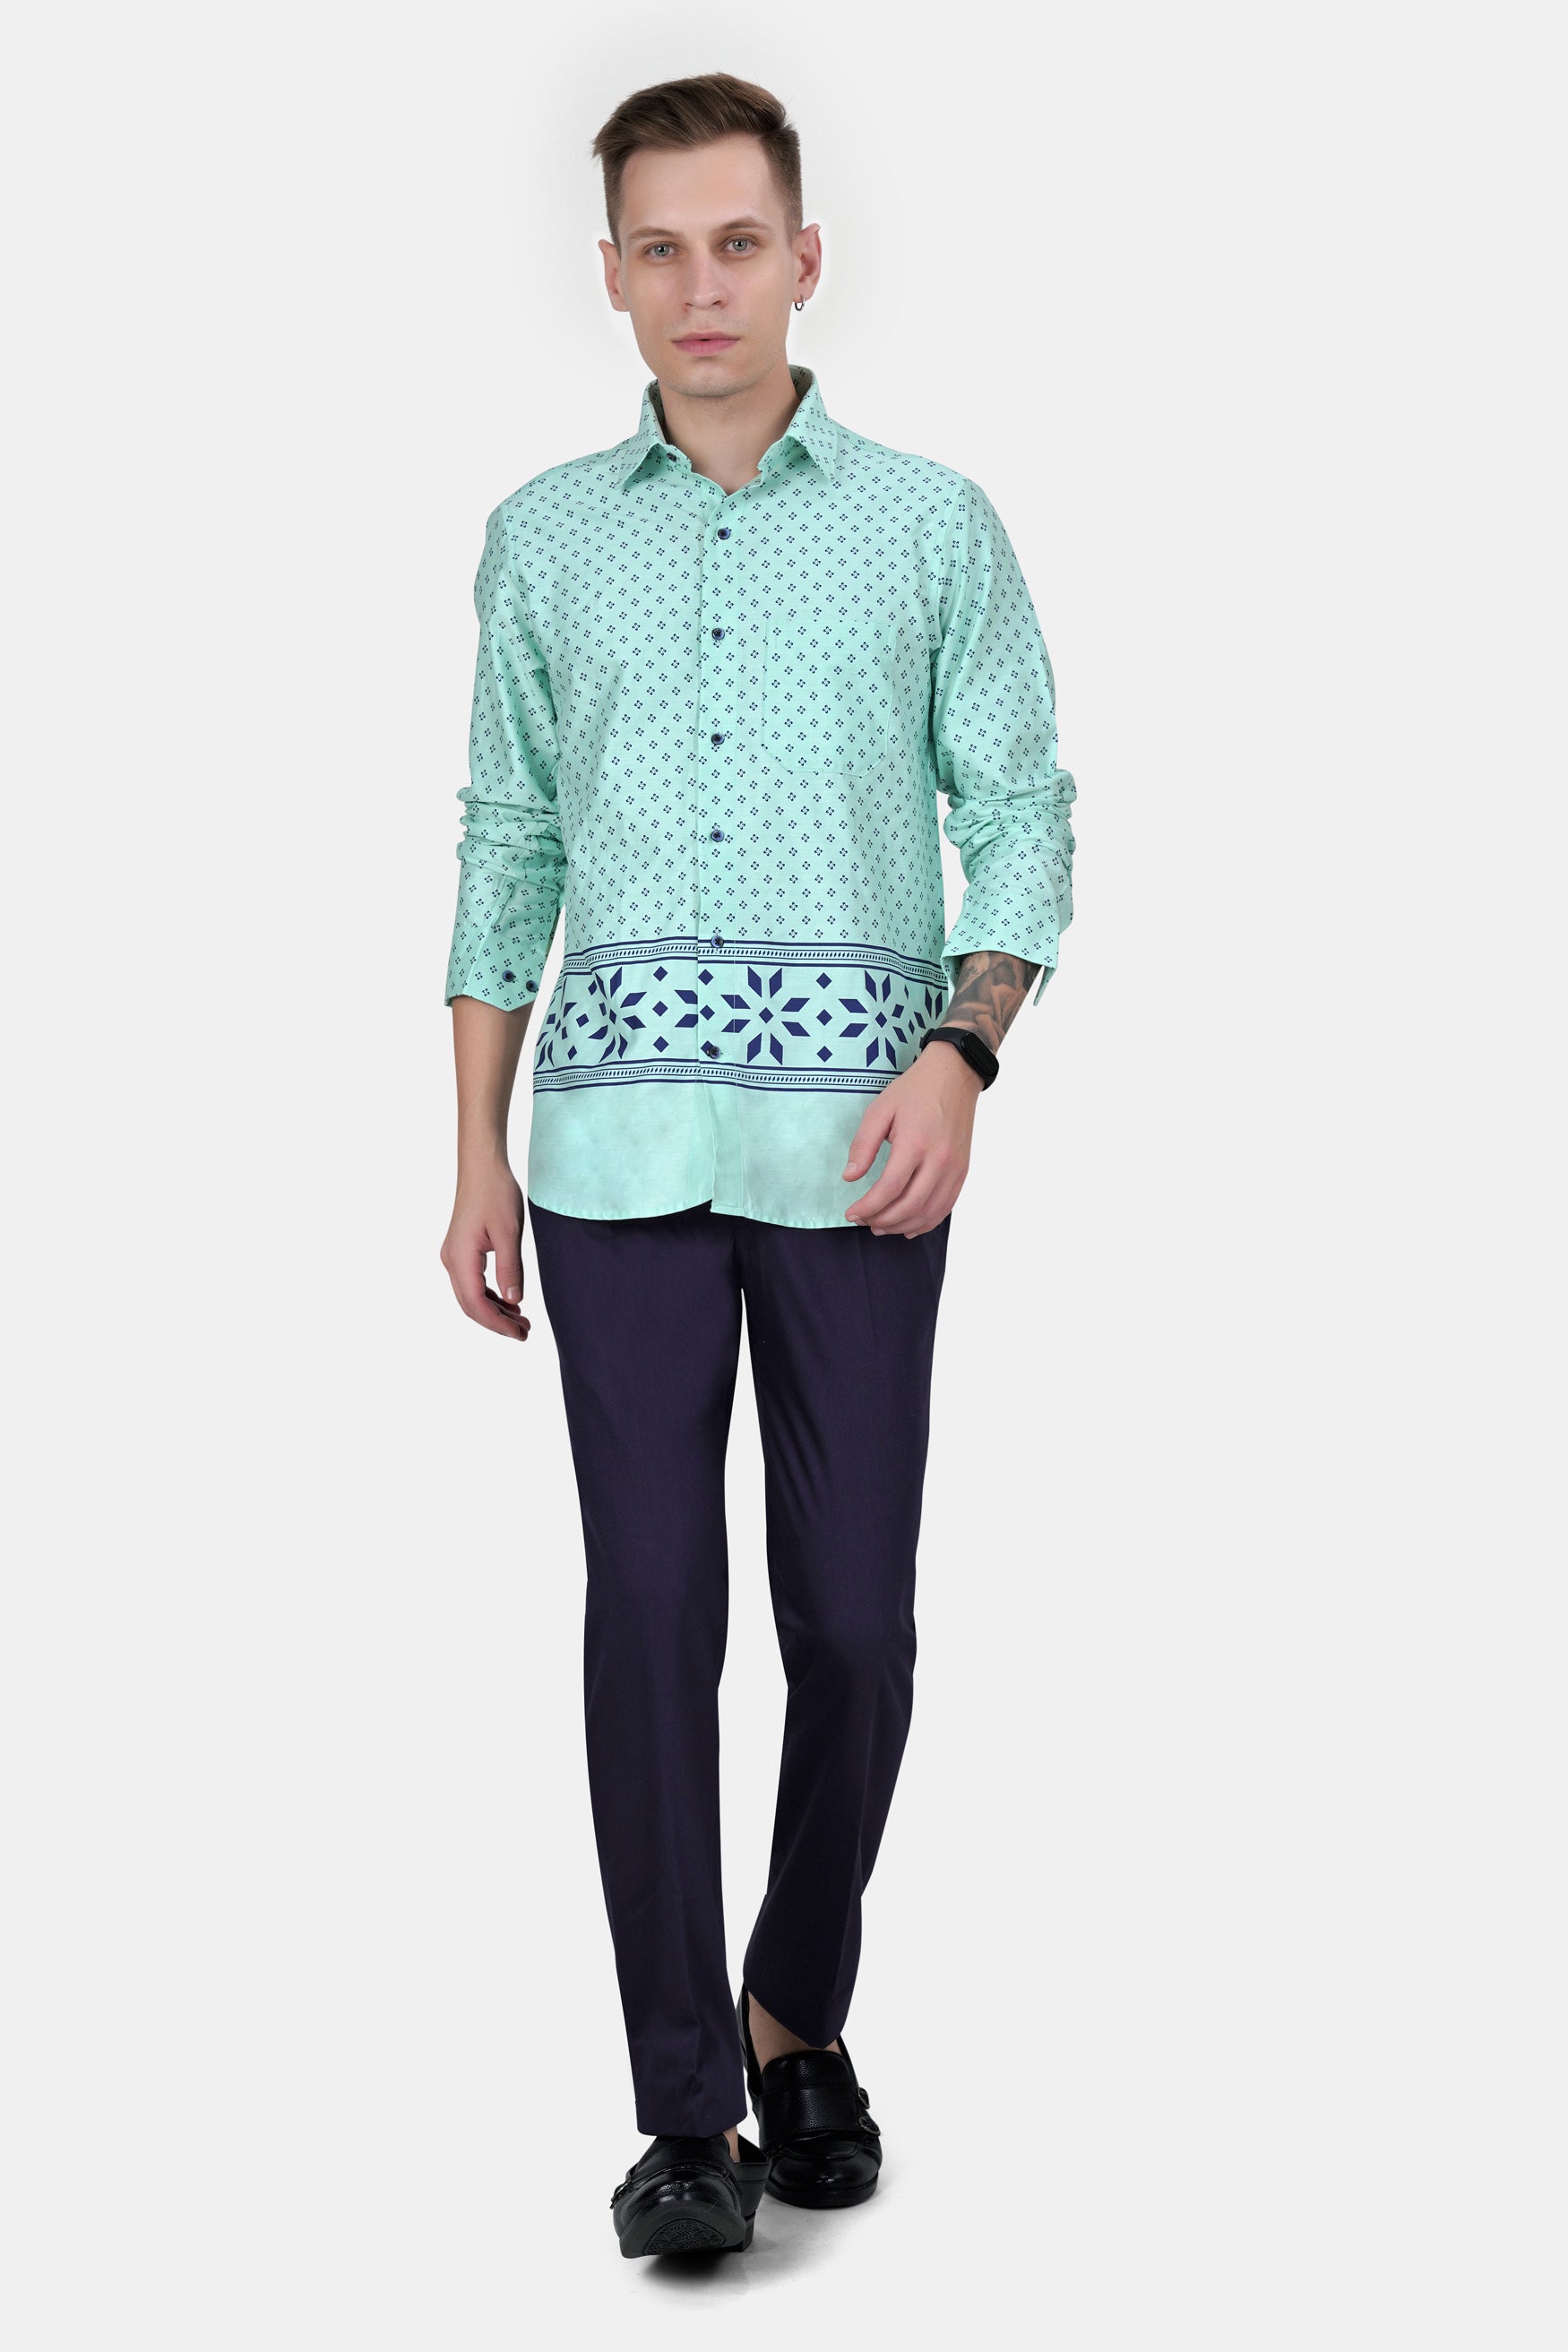 Montecarlo Green and Prussian Blue Block Printed Twill Premium Cotton Shirt